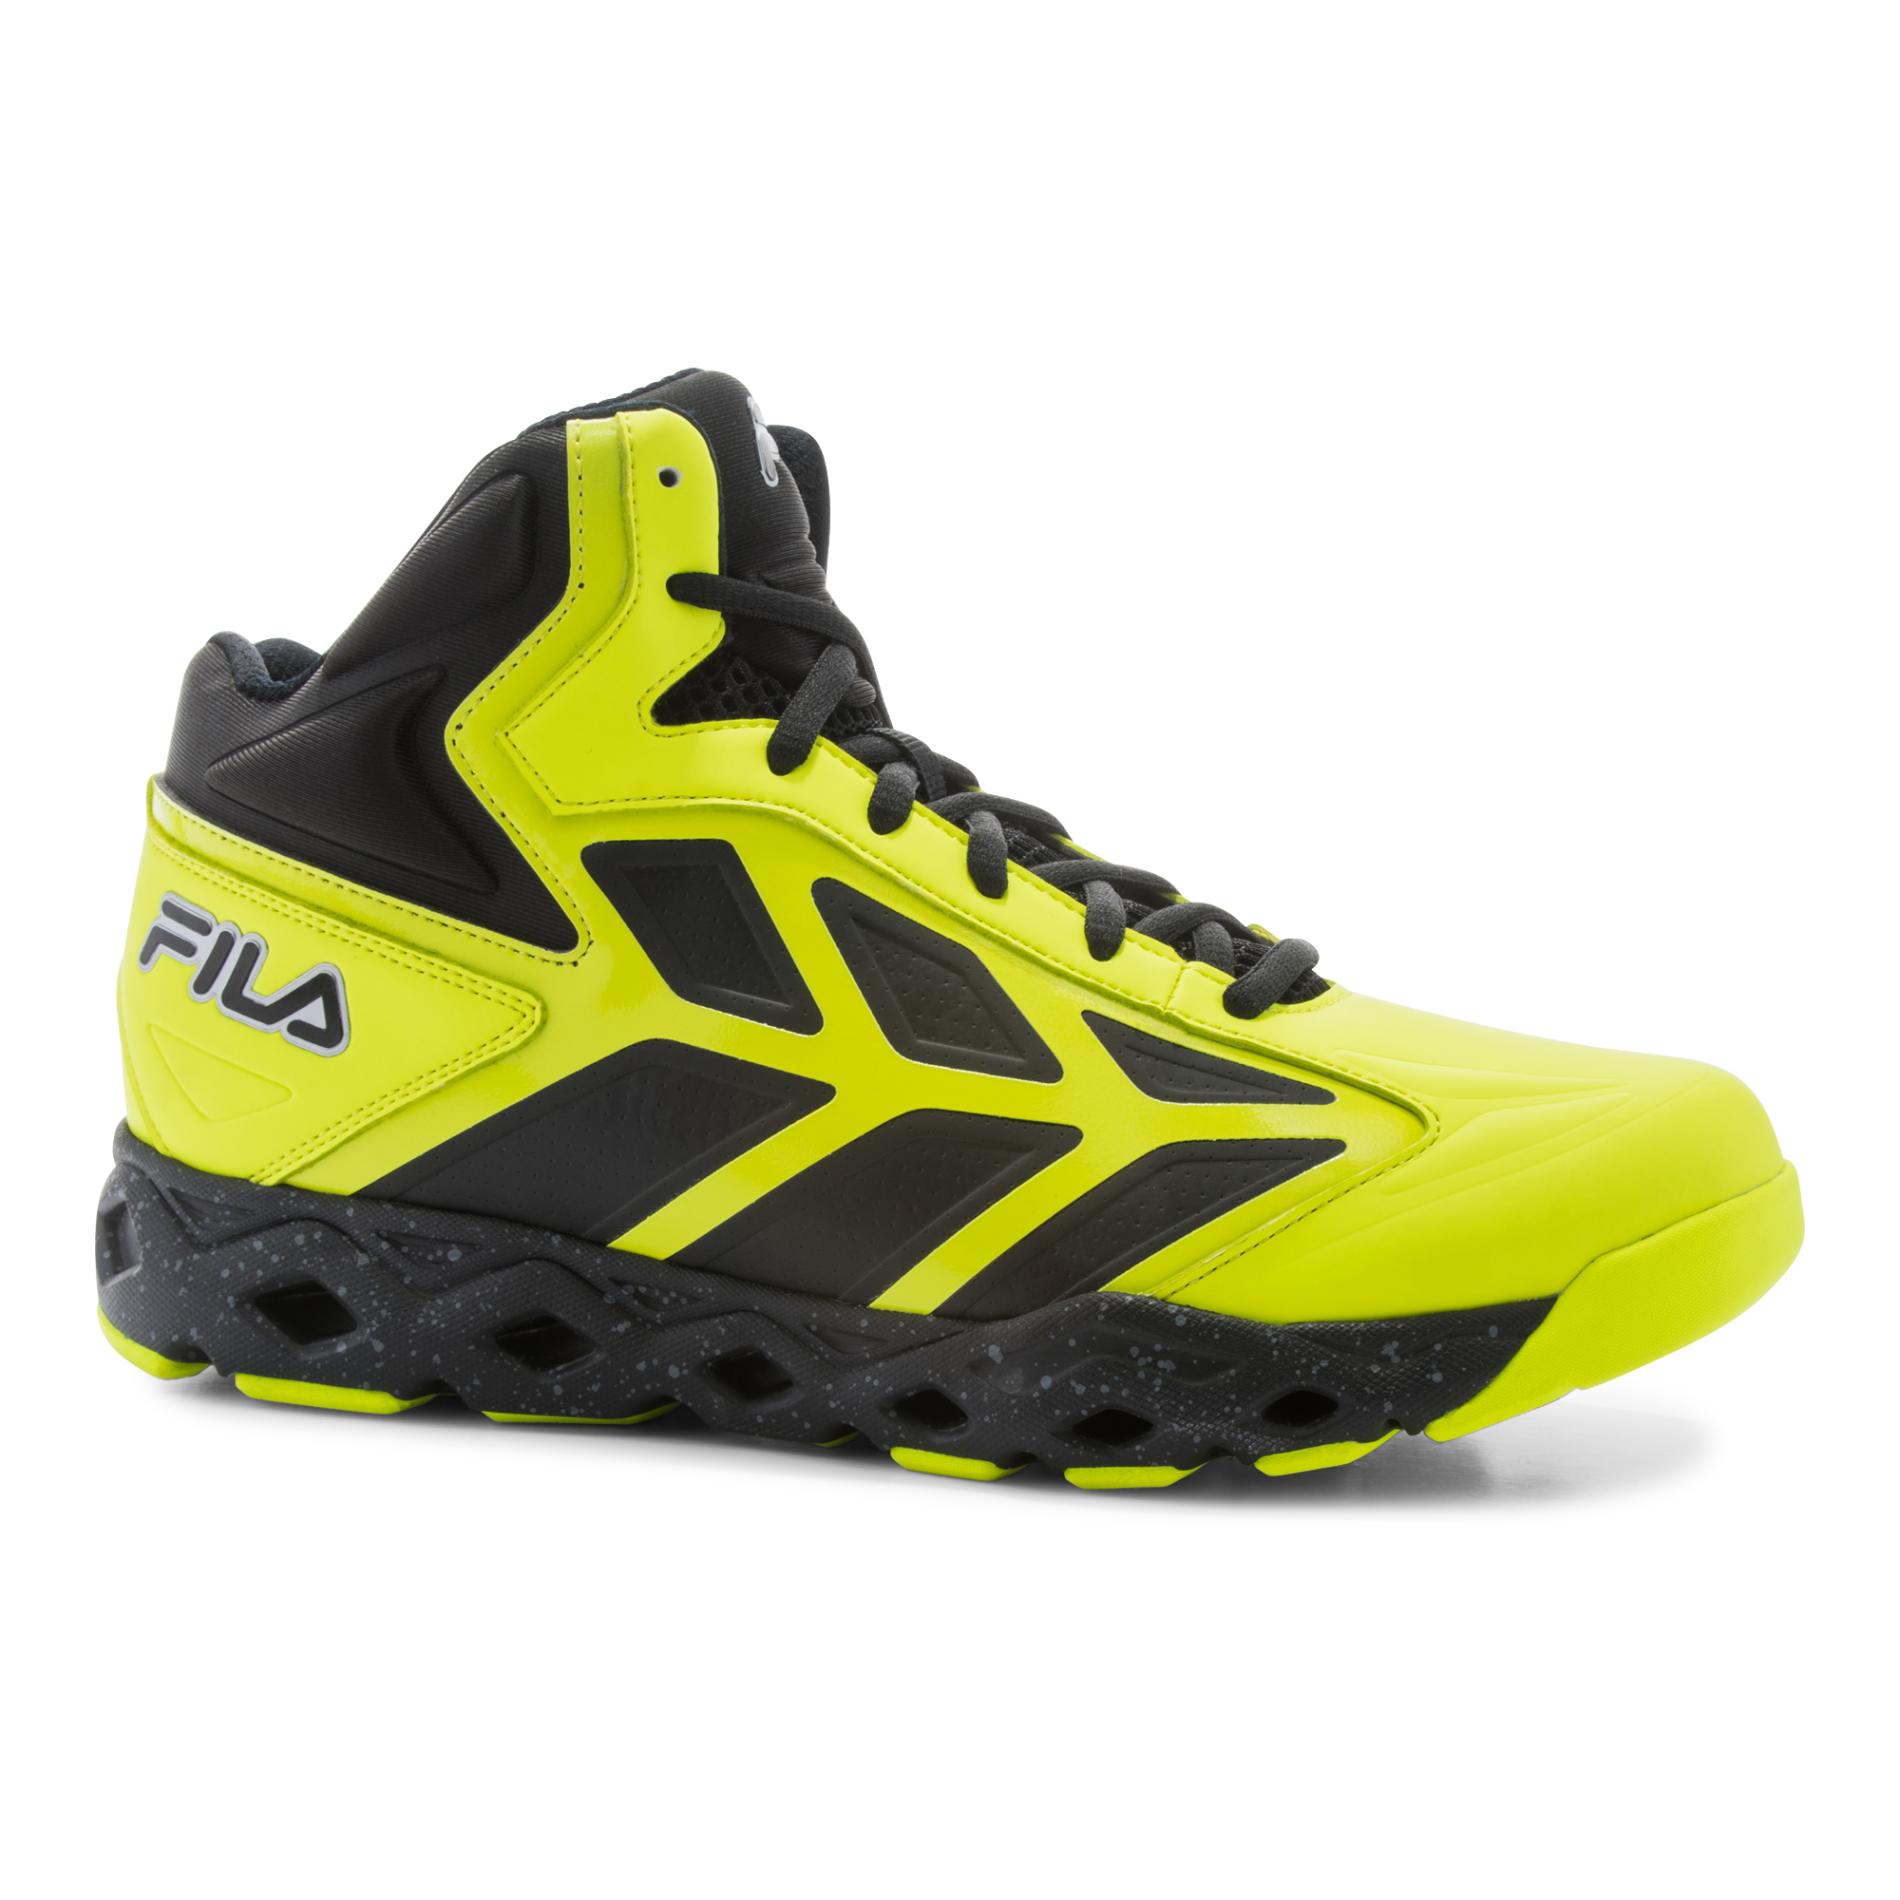 Fila Men's Torranado Athletic Shoe - Yellow/Black